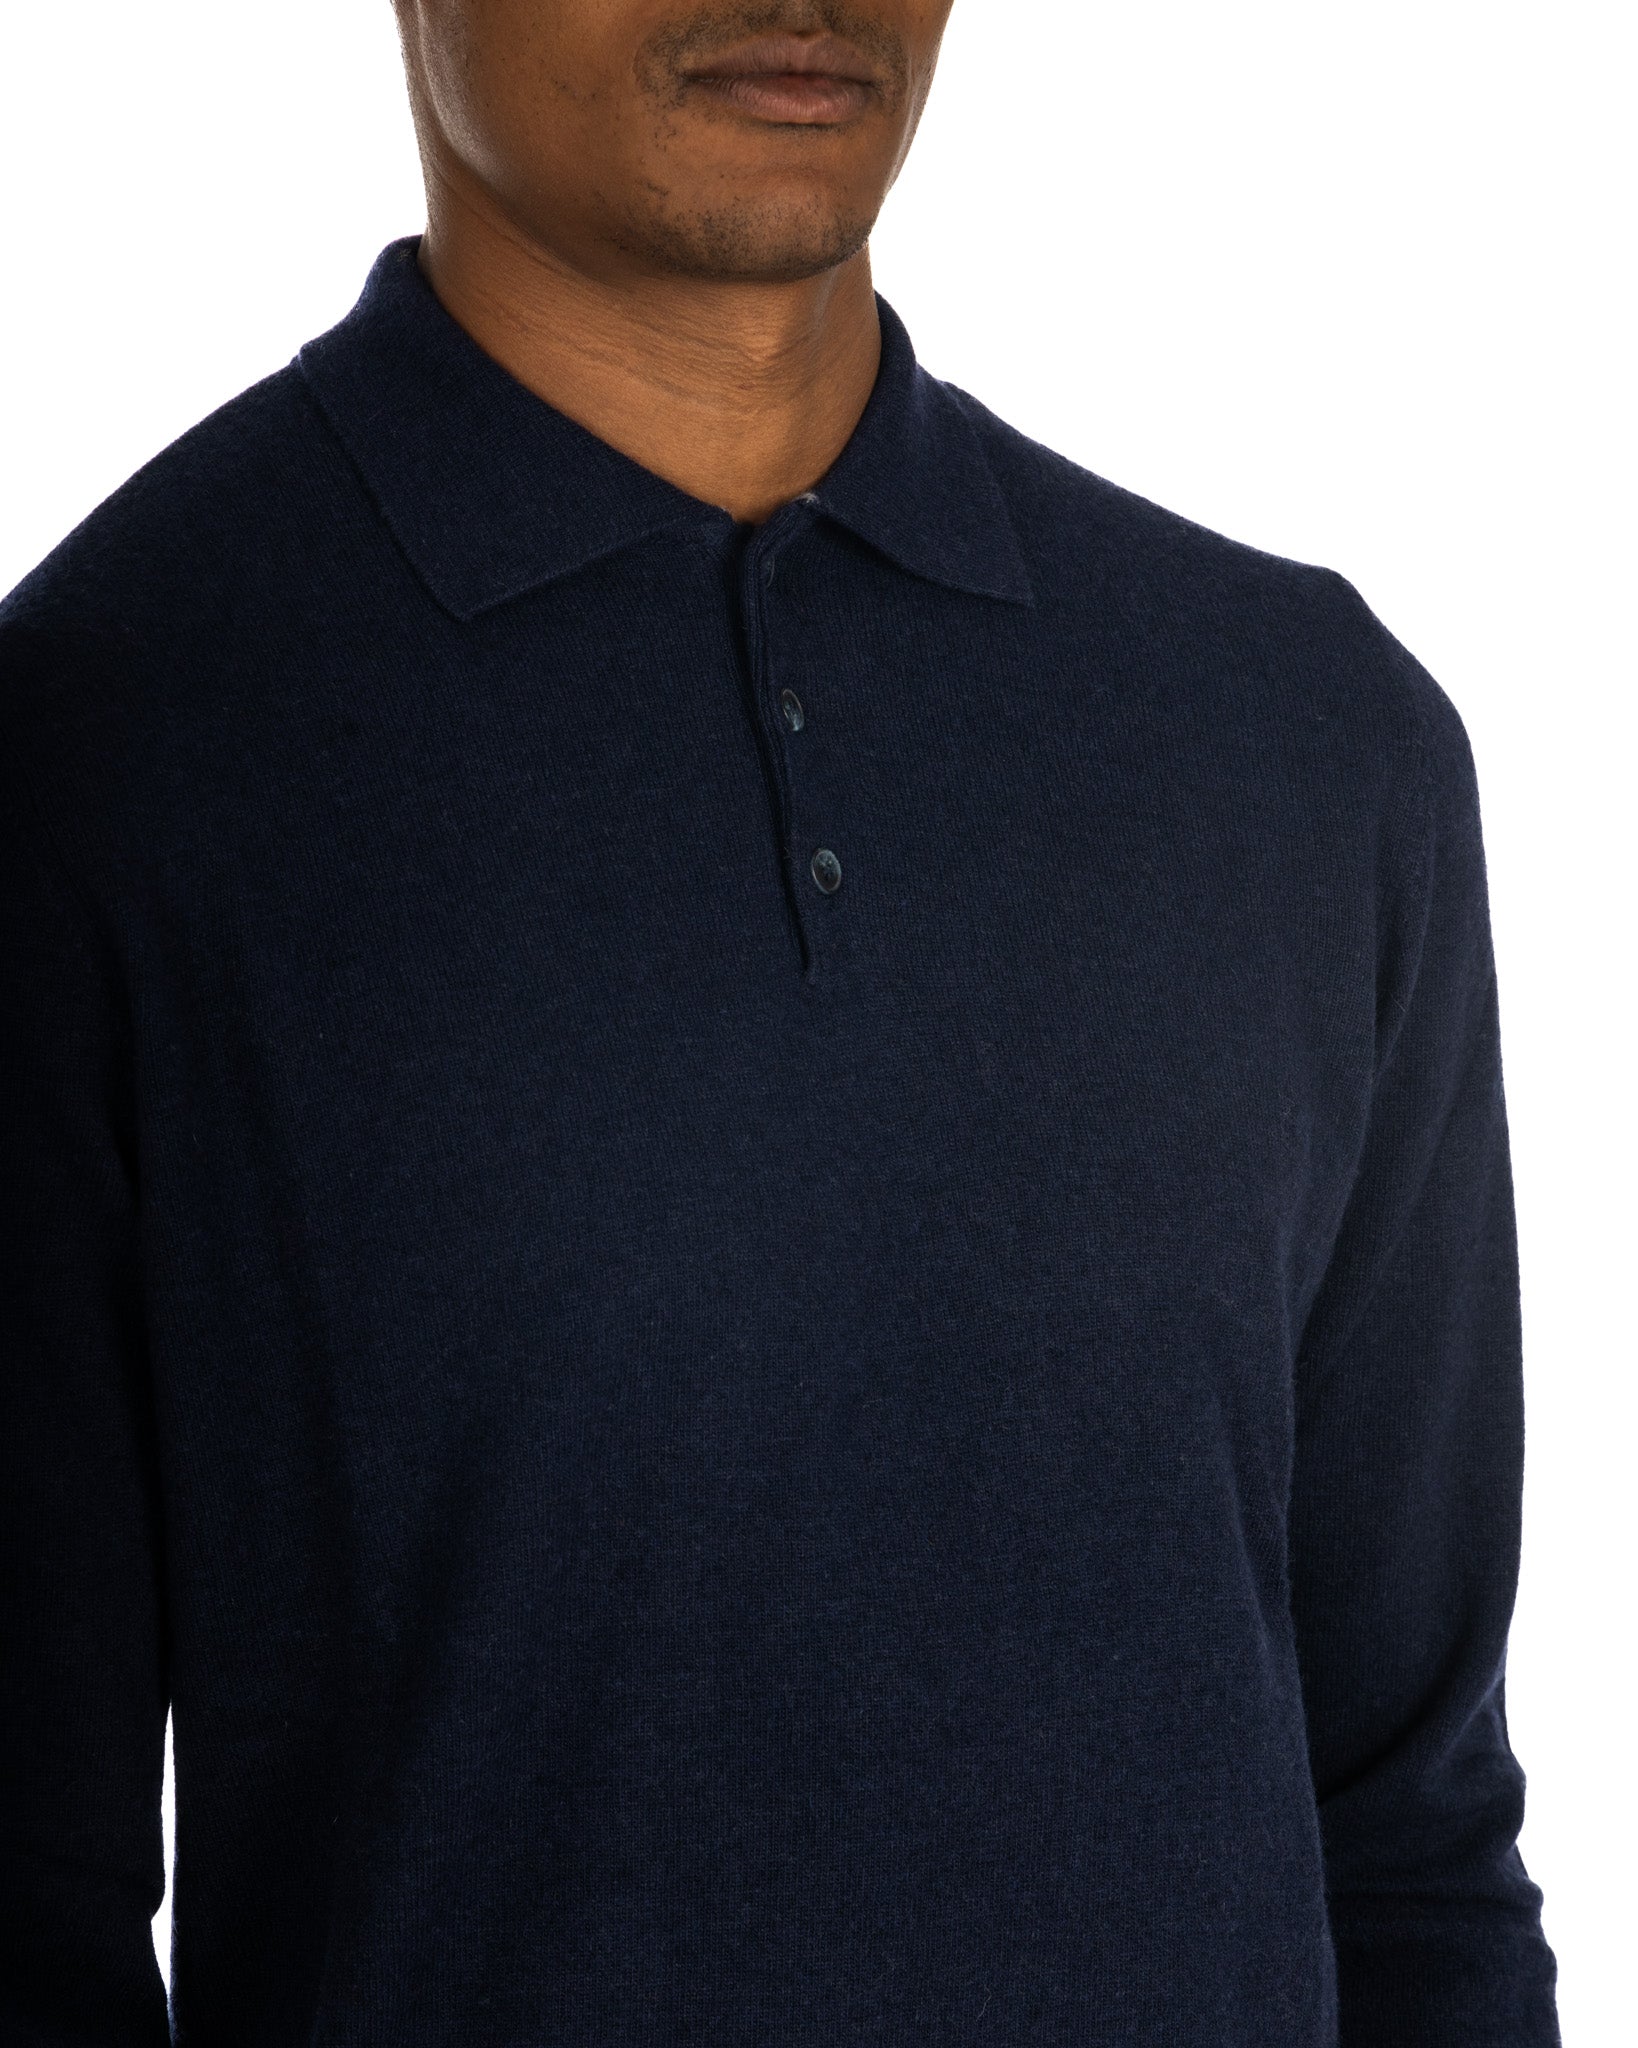 Tiger - blue cashmere blend polo shirt